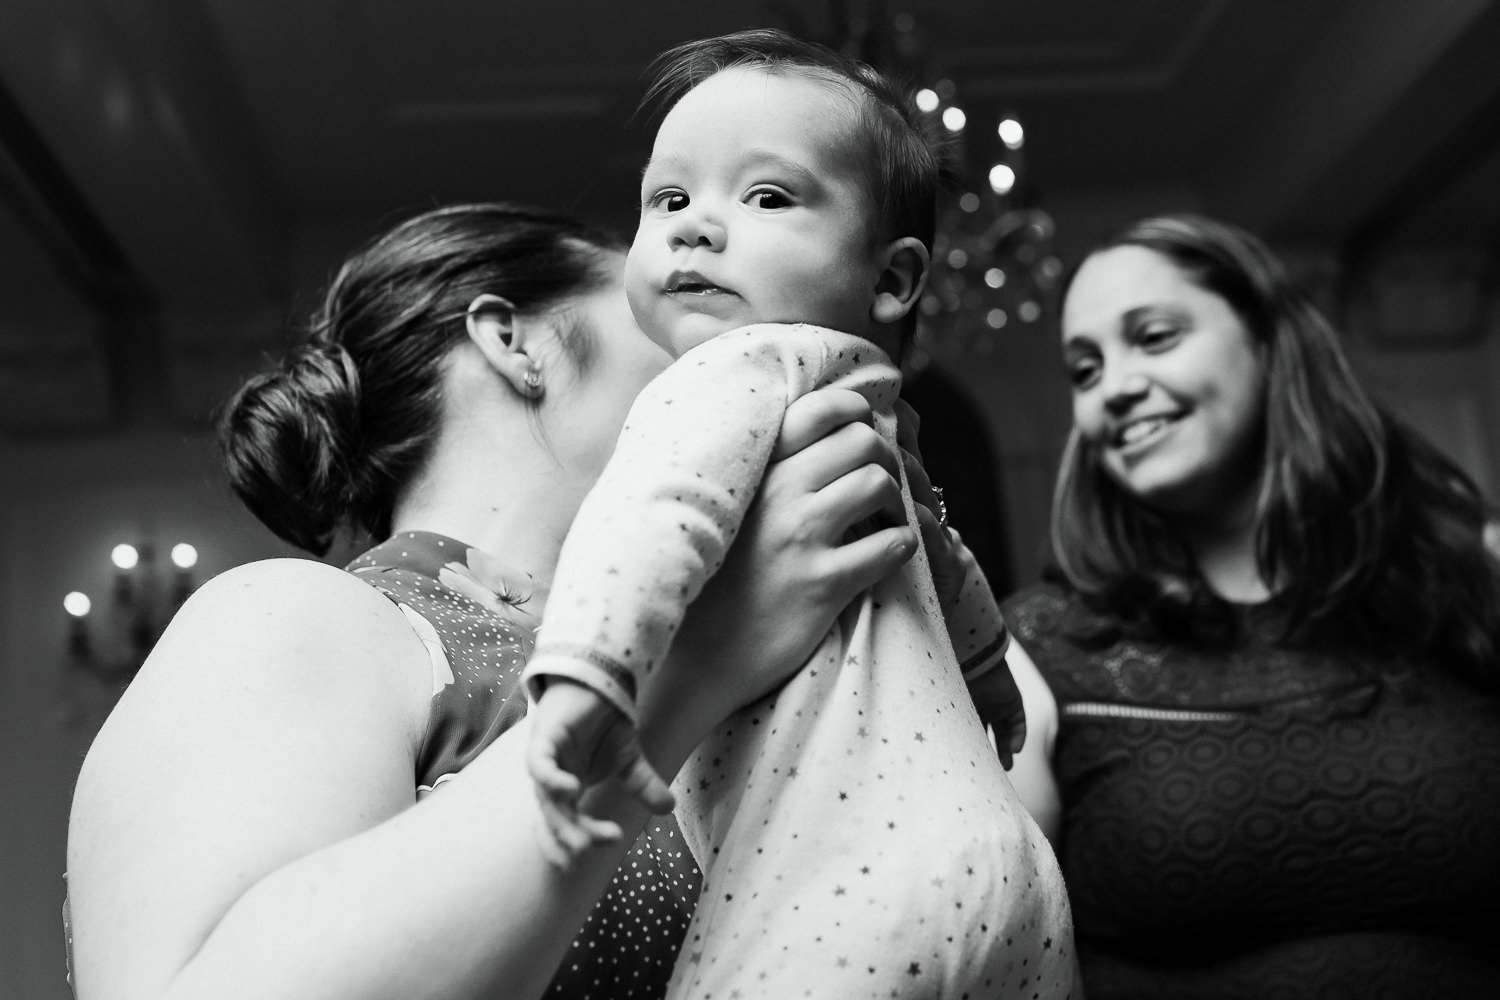 Baby looking at camera at New Castle NH wedding celebration